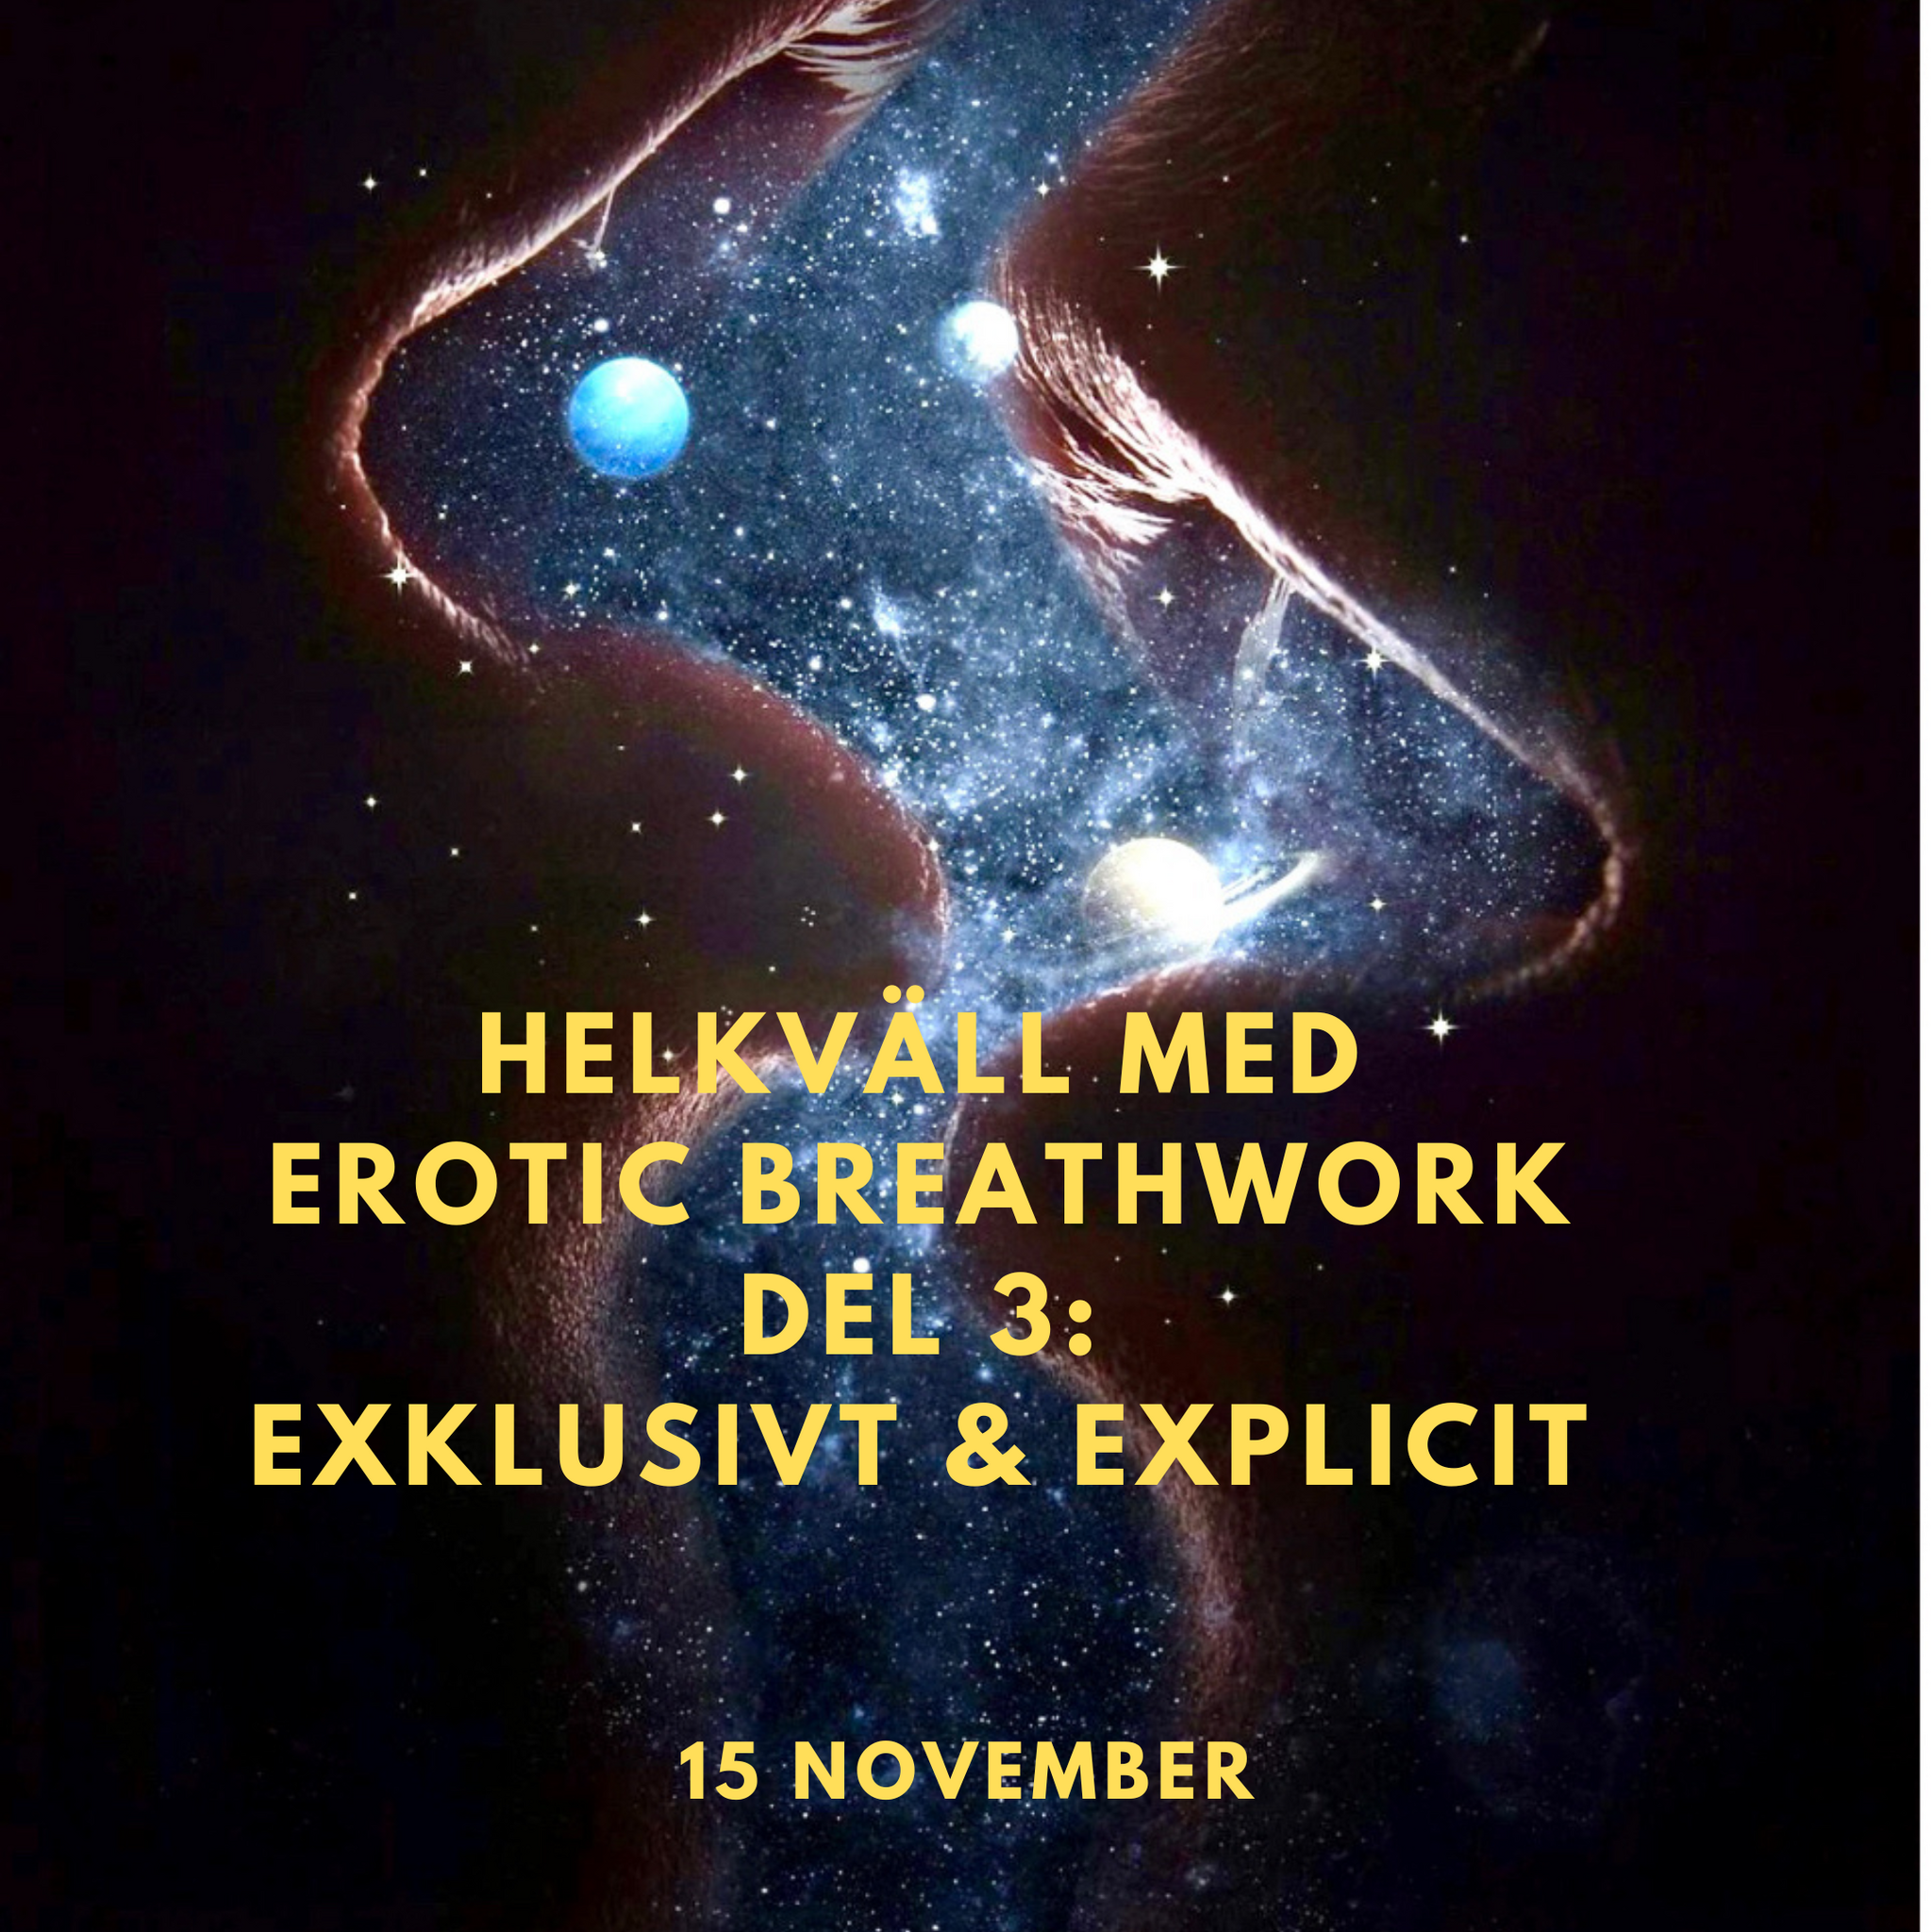 Erotisk breathwork 15/11: Exklusivt & explicit